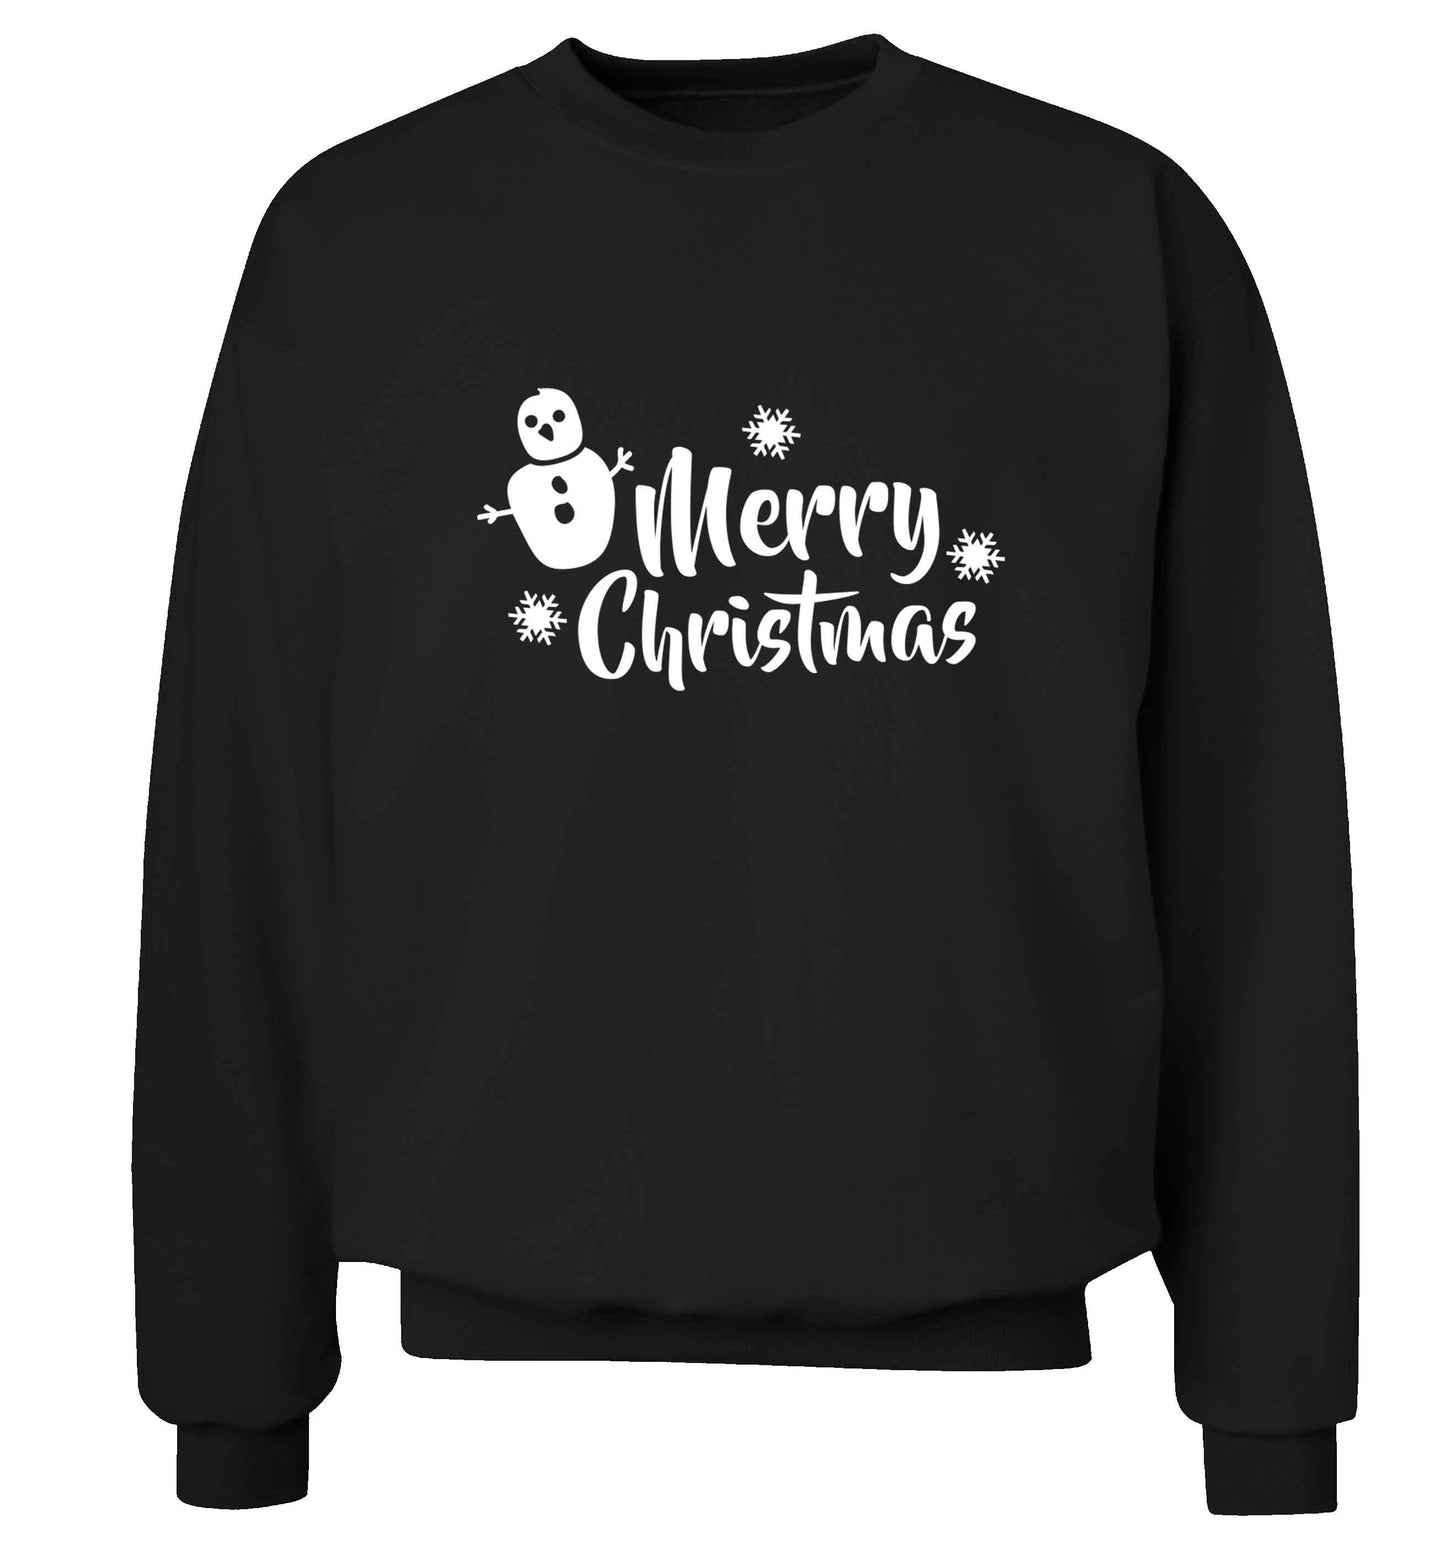 Merry Christmas - snowman adult's unisex black sweater 2XL